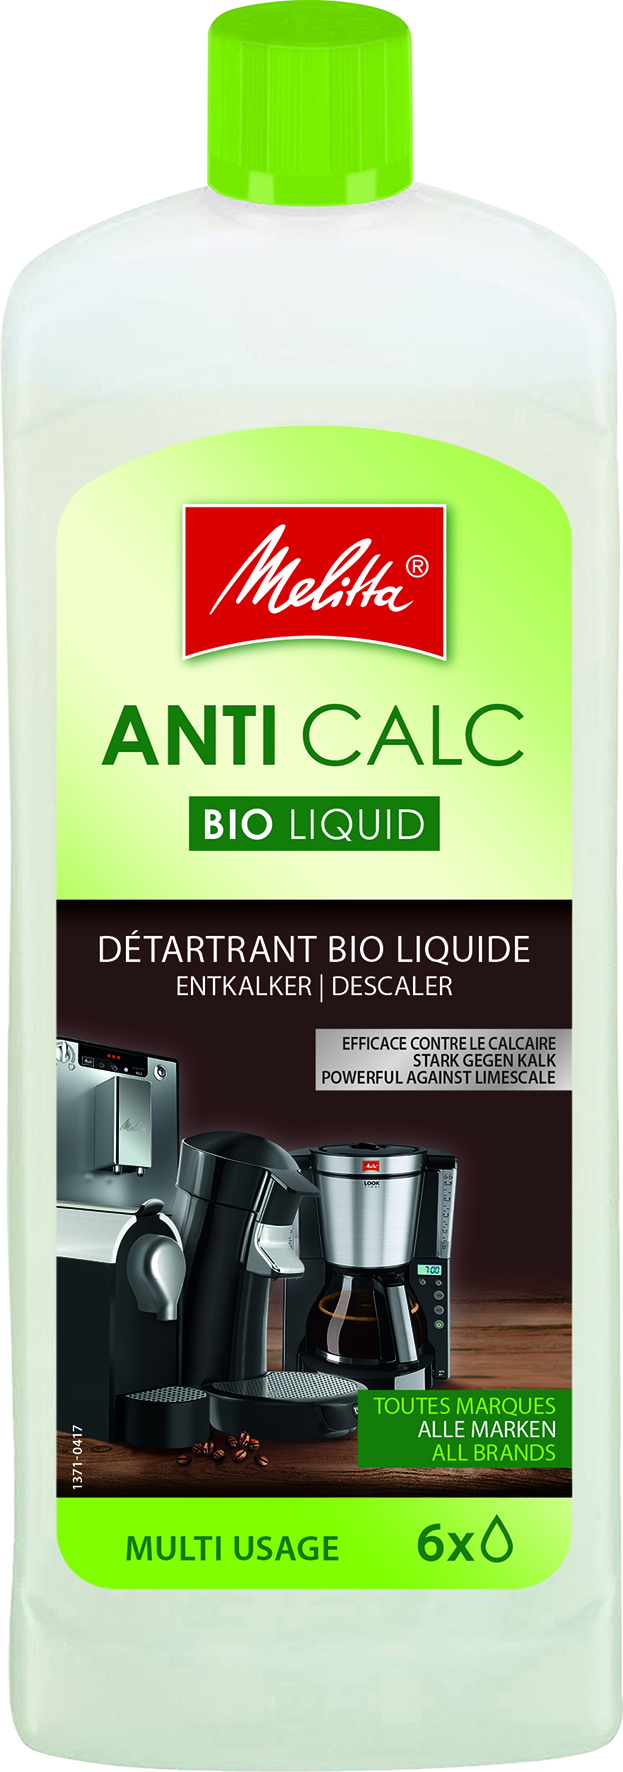 Melitta Descalcificador Limpiador express cafeteras goteo biodegradable 6 usos 250 0.25 litros muliusos para anti calc liquid multiusos 250ml